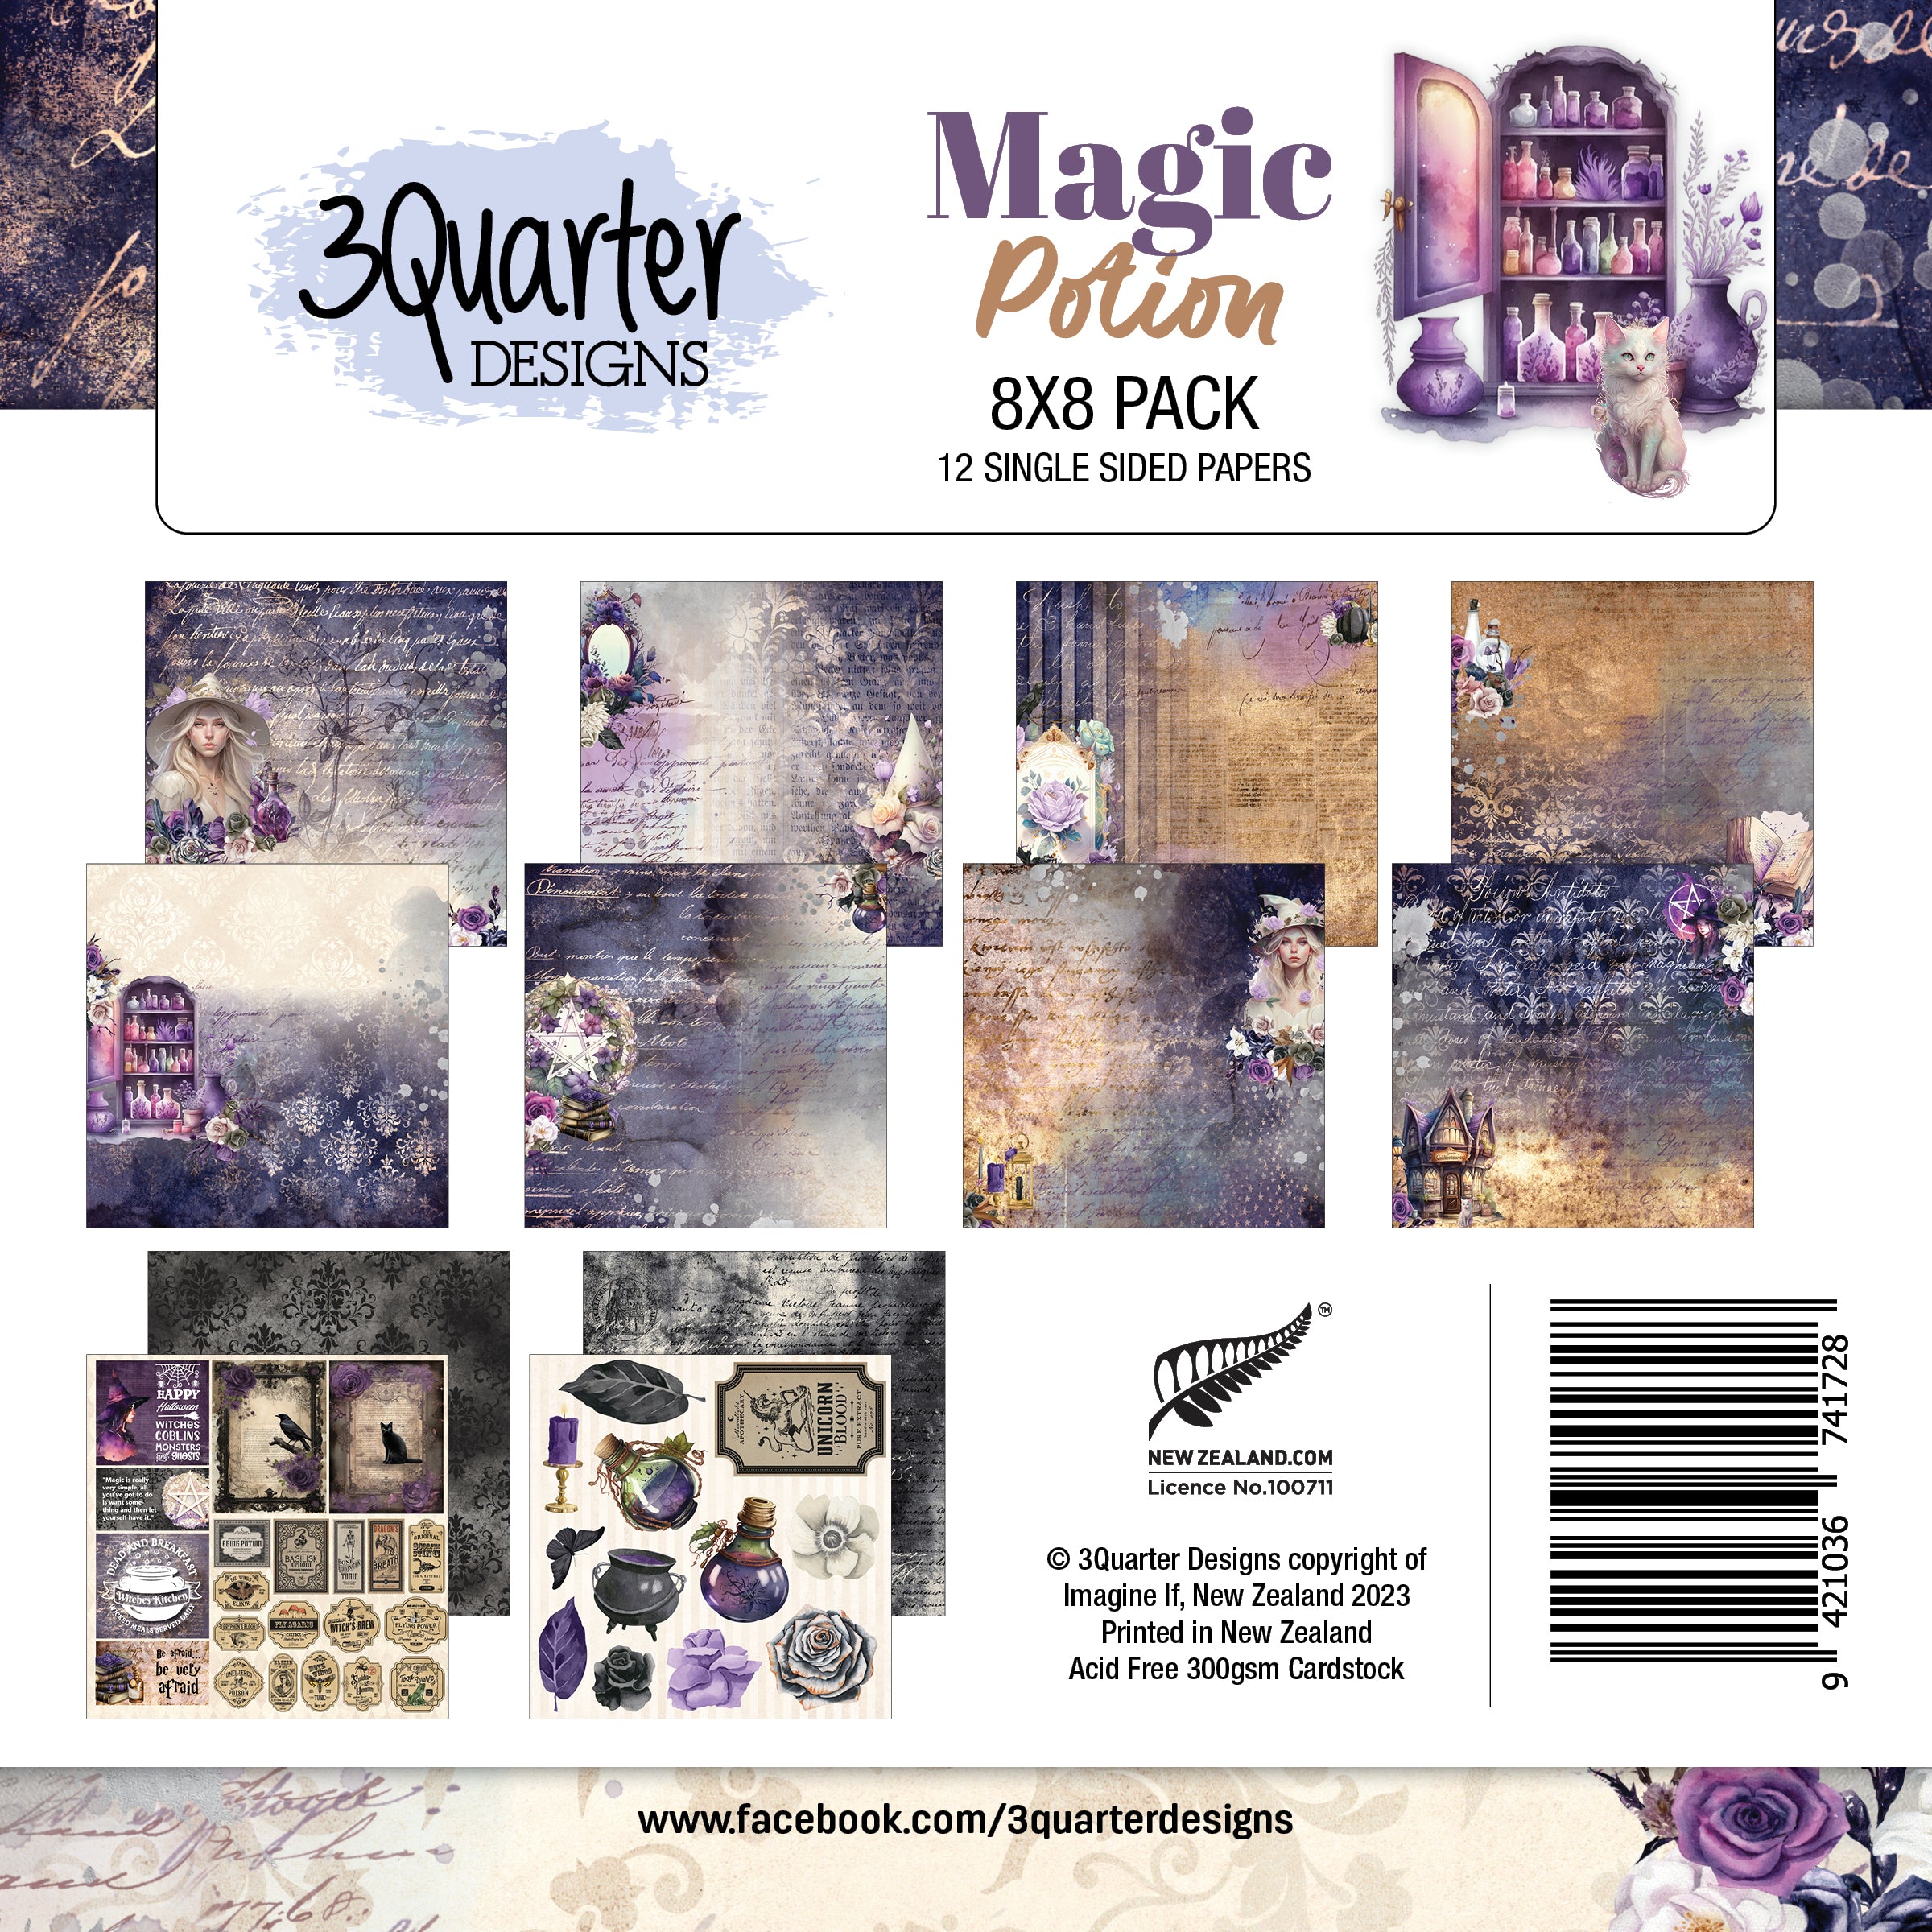 Magic Potion 8x8 Pack